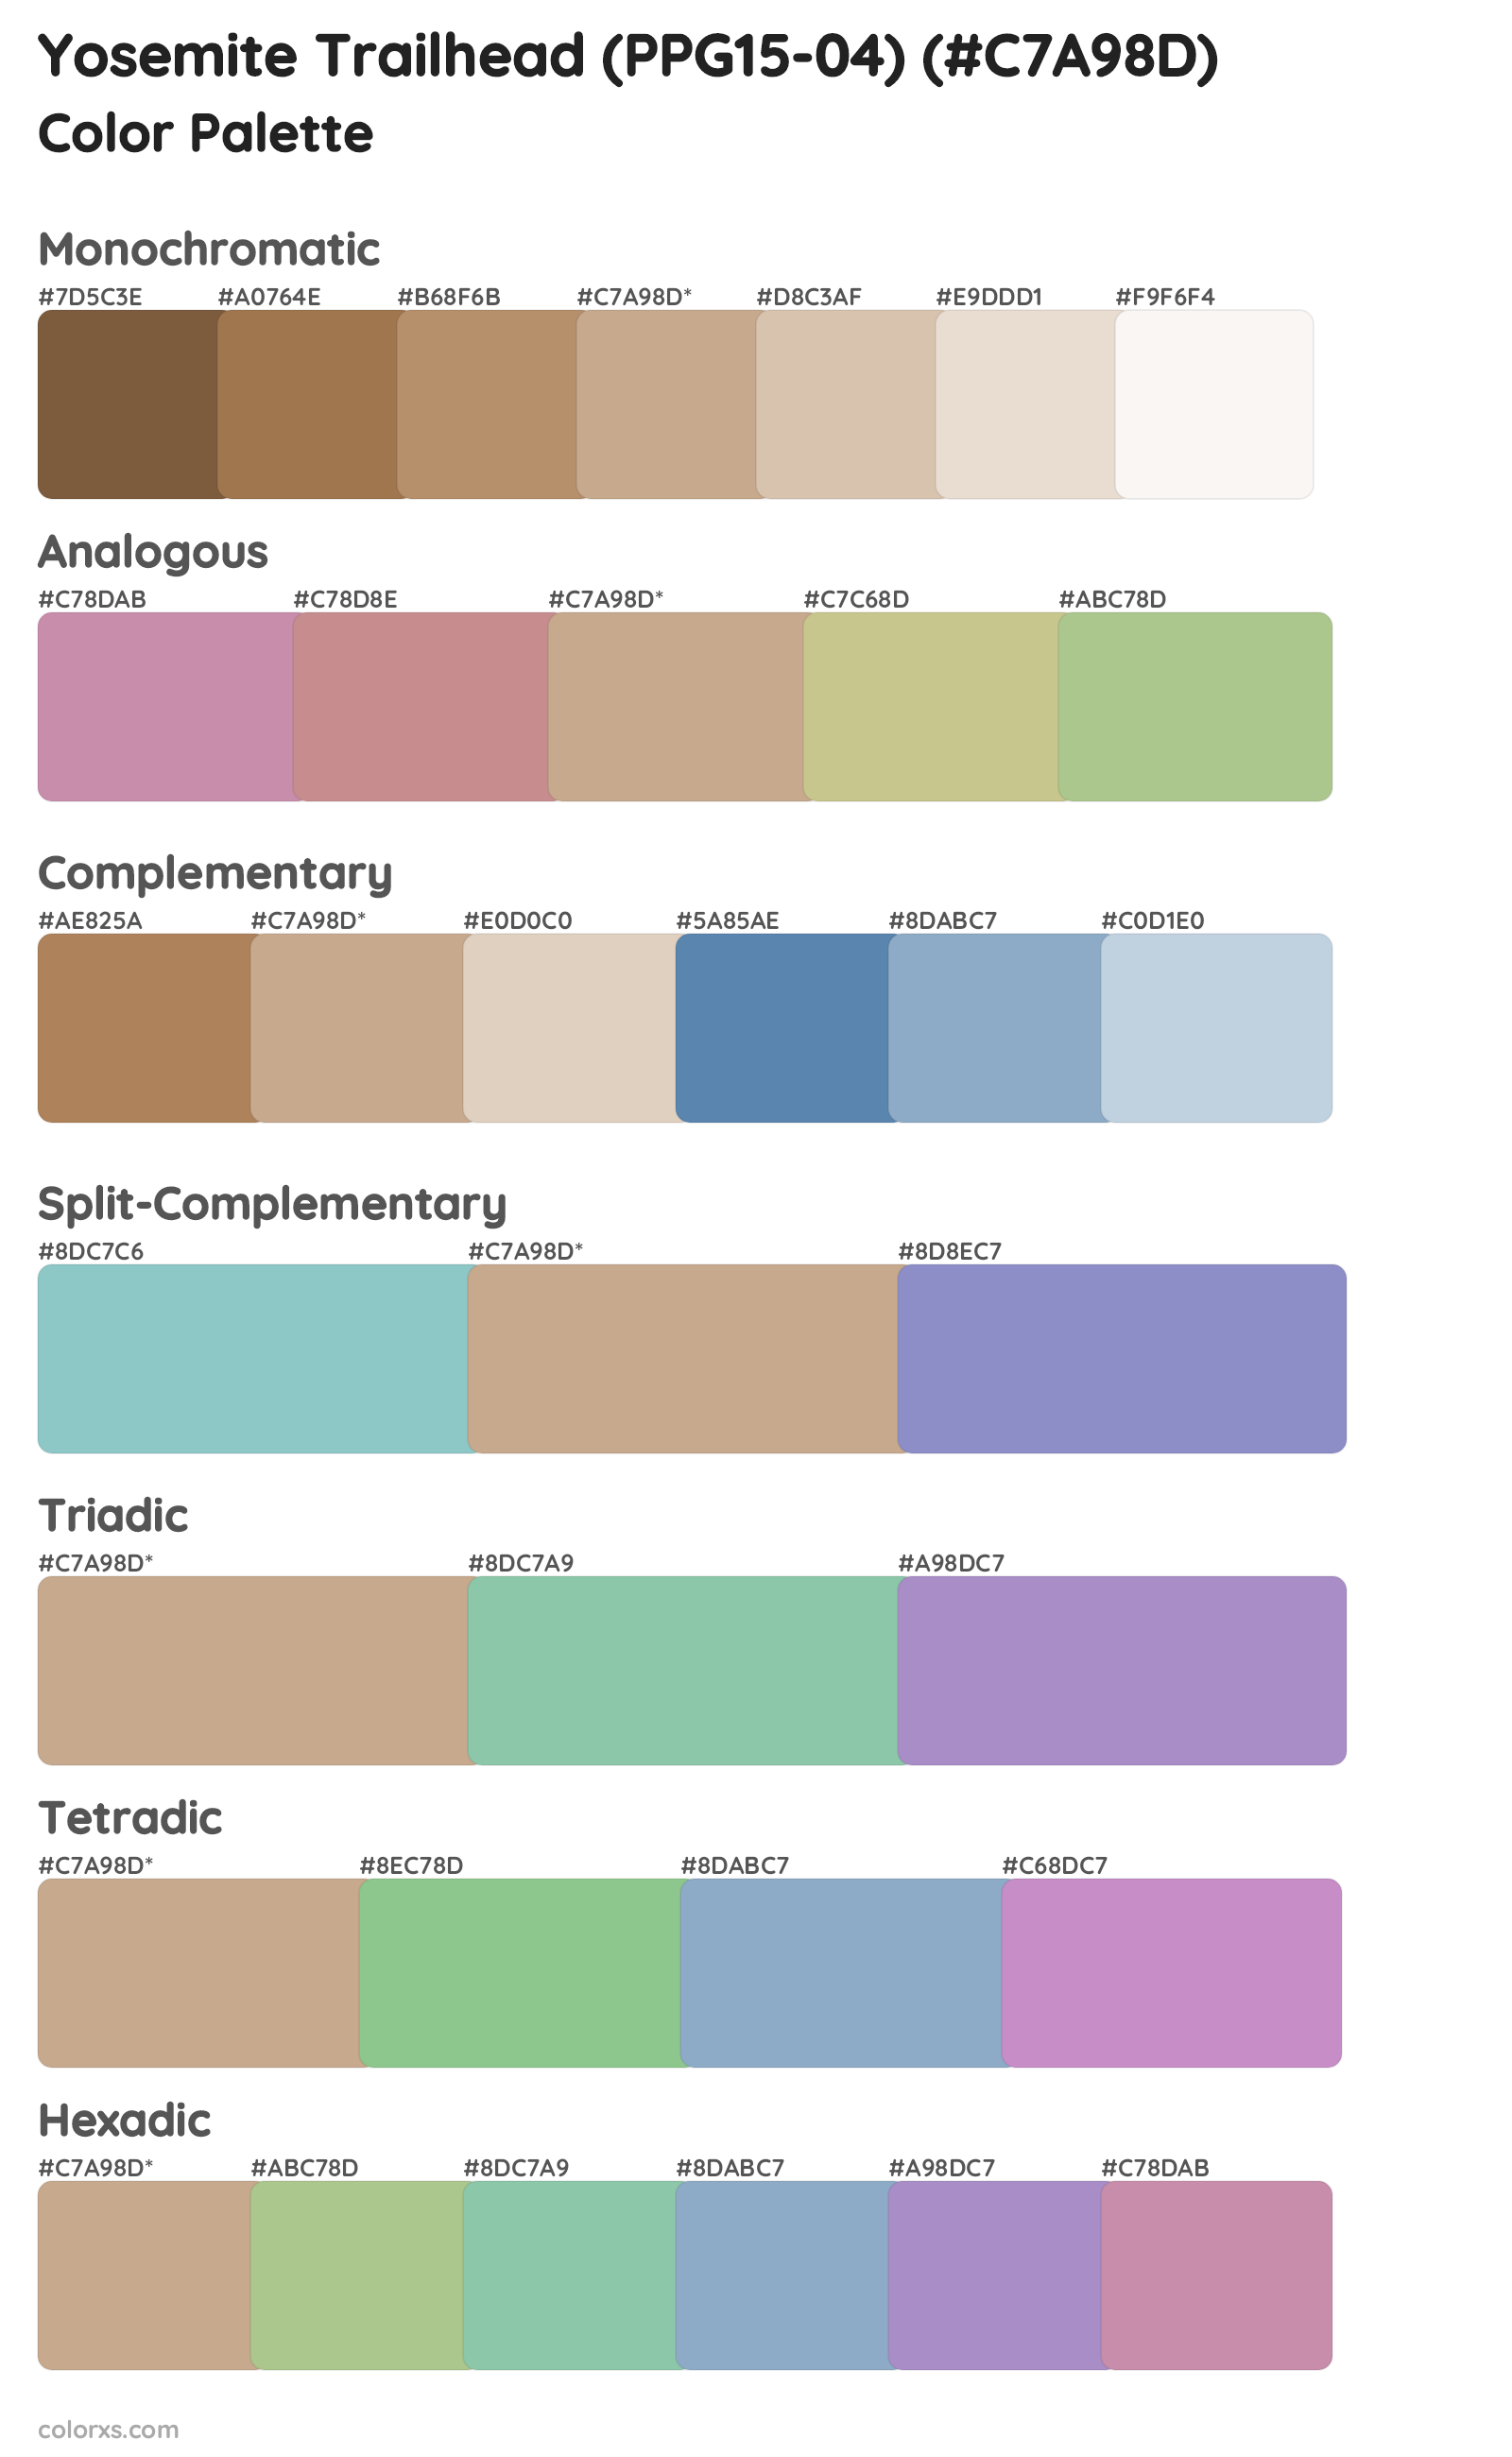 Yosemite Trailhead (PPG15-04) Color Scheme Palettes